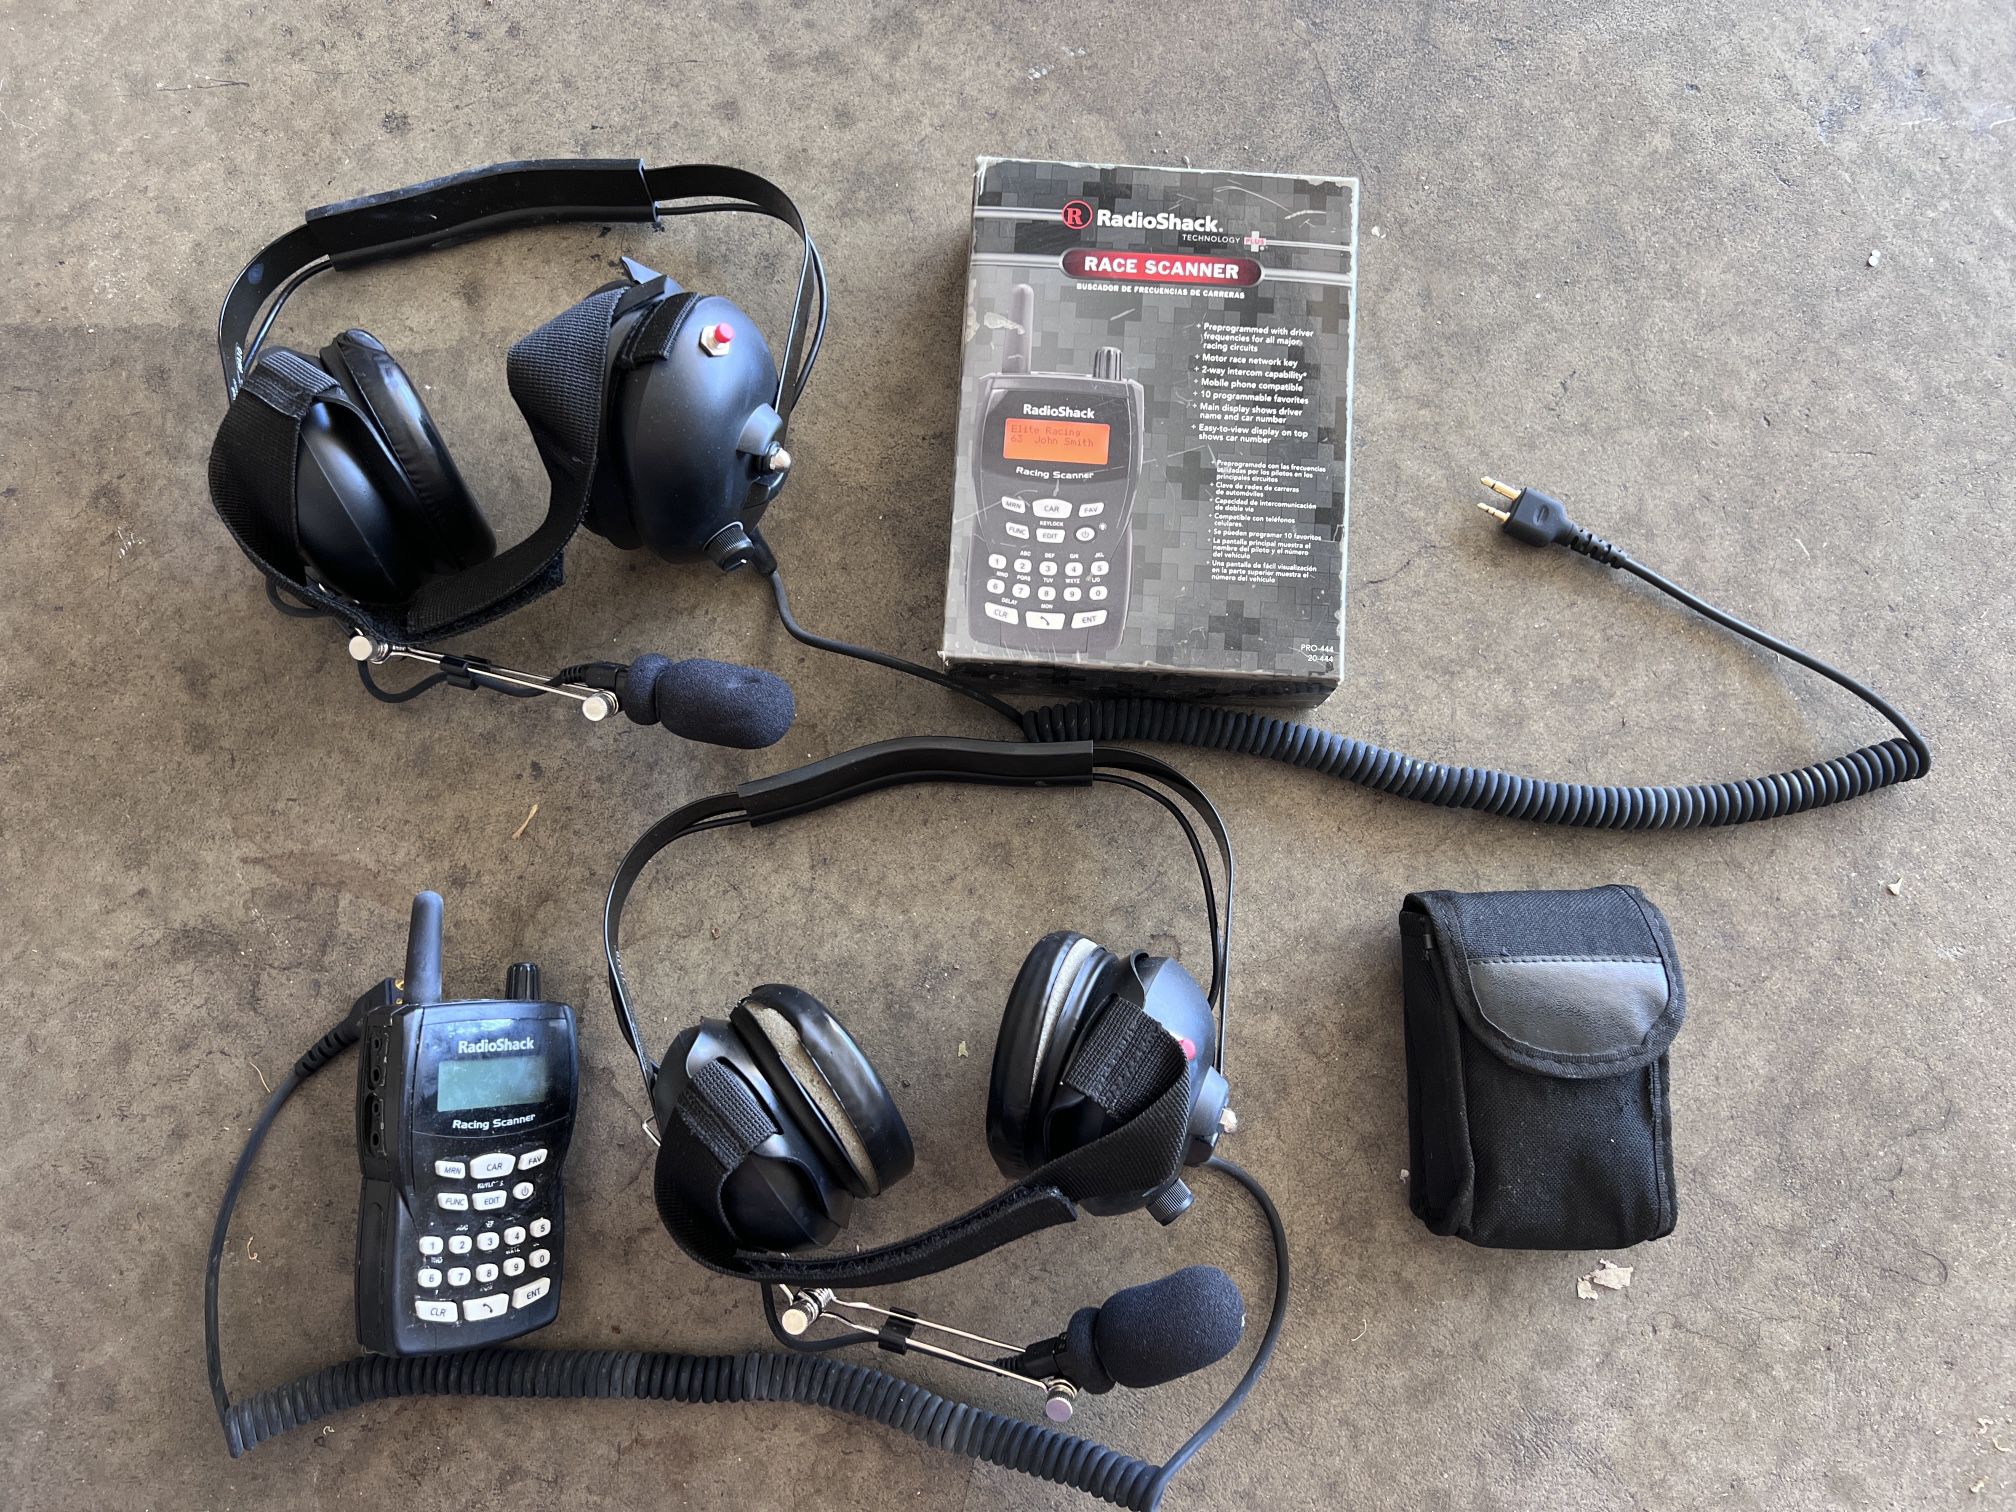 Radio Shack Race Scanner PRO-444 with Intercom Headsets